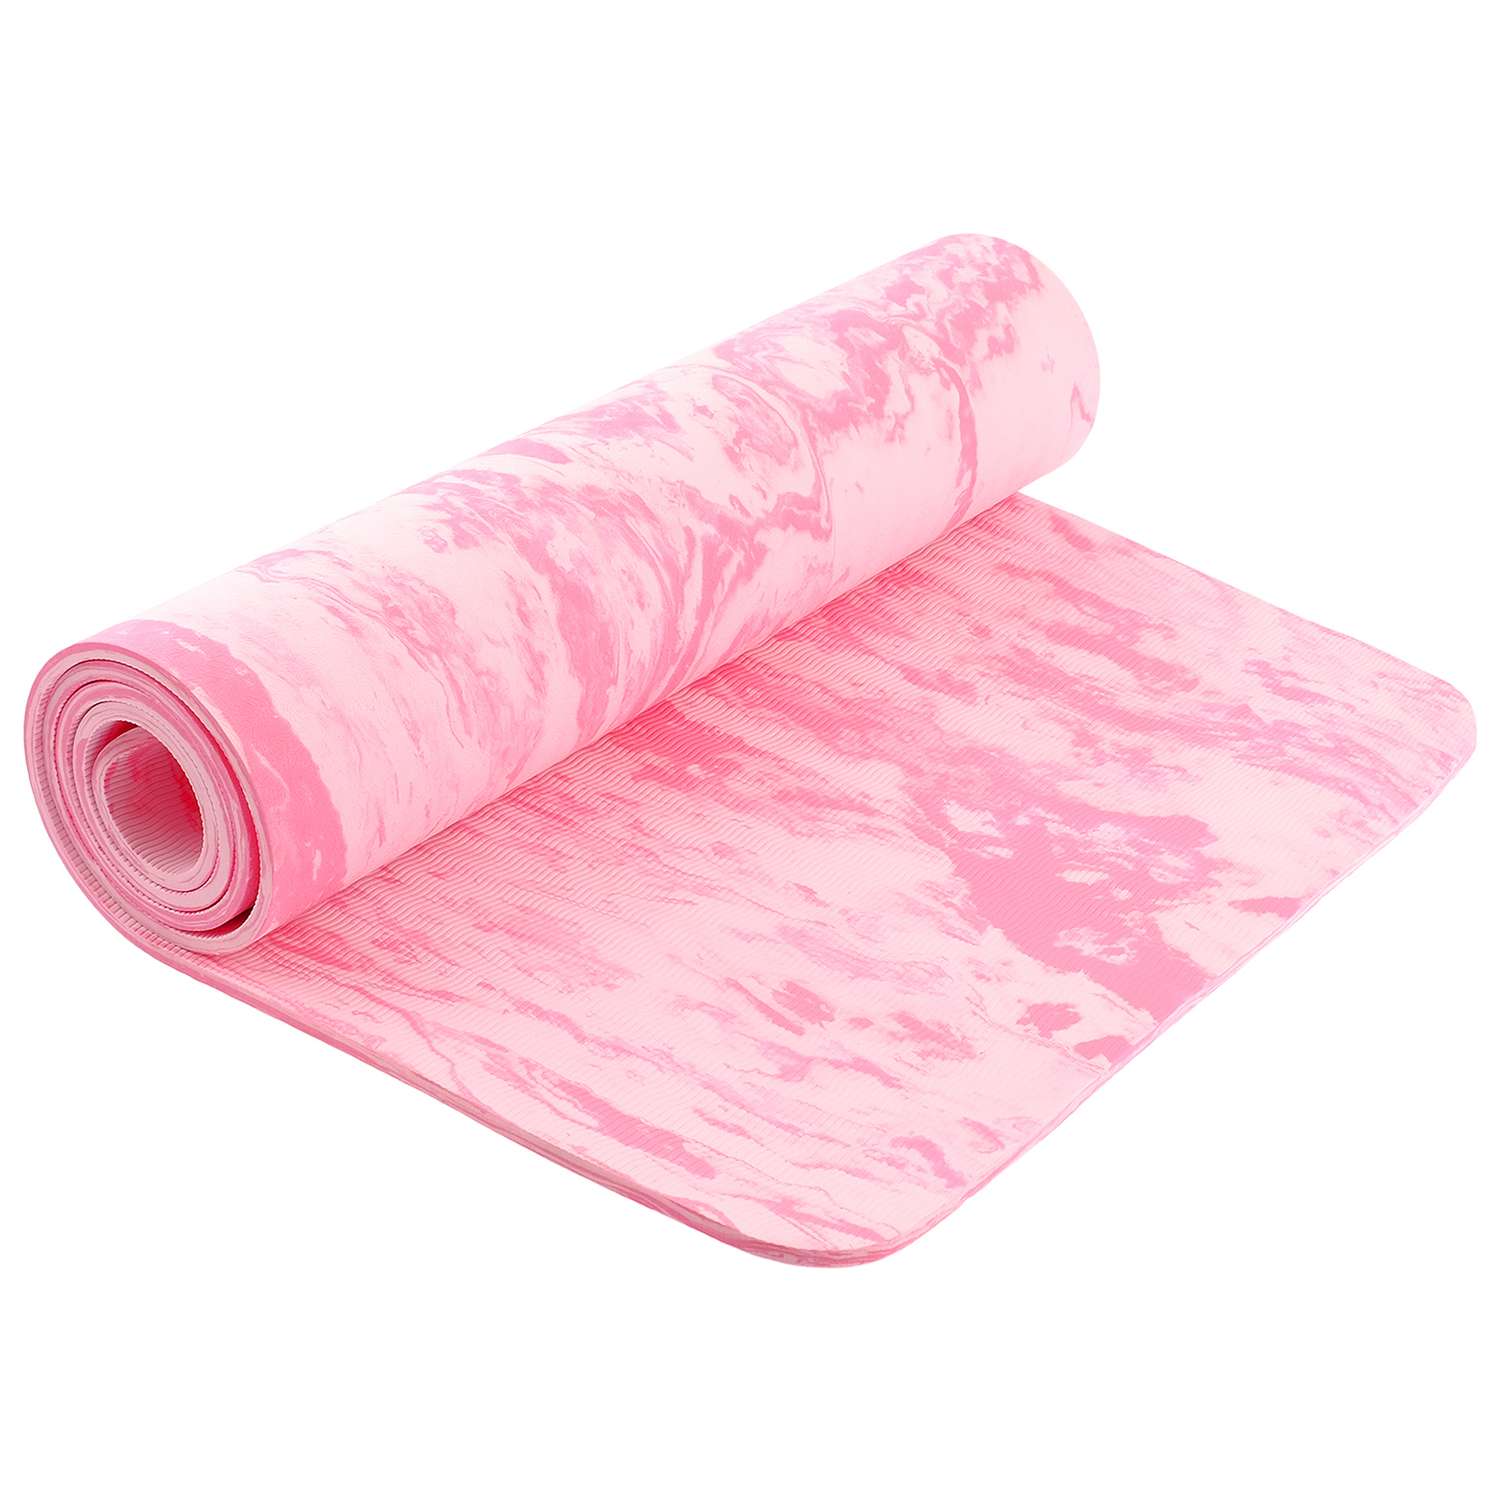 Коврик Sangh Для йоги розовый - фото 1